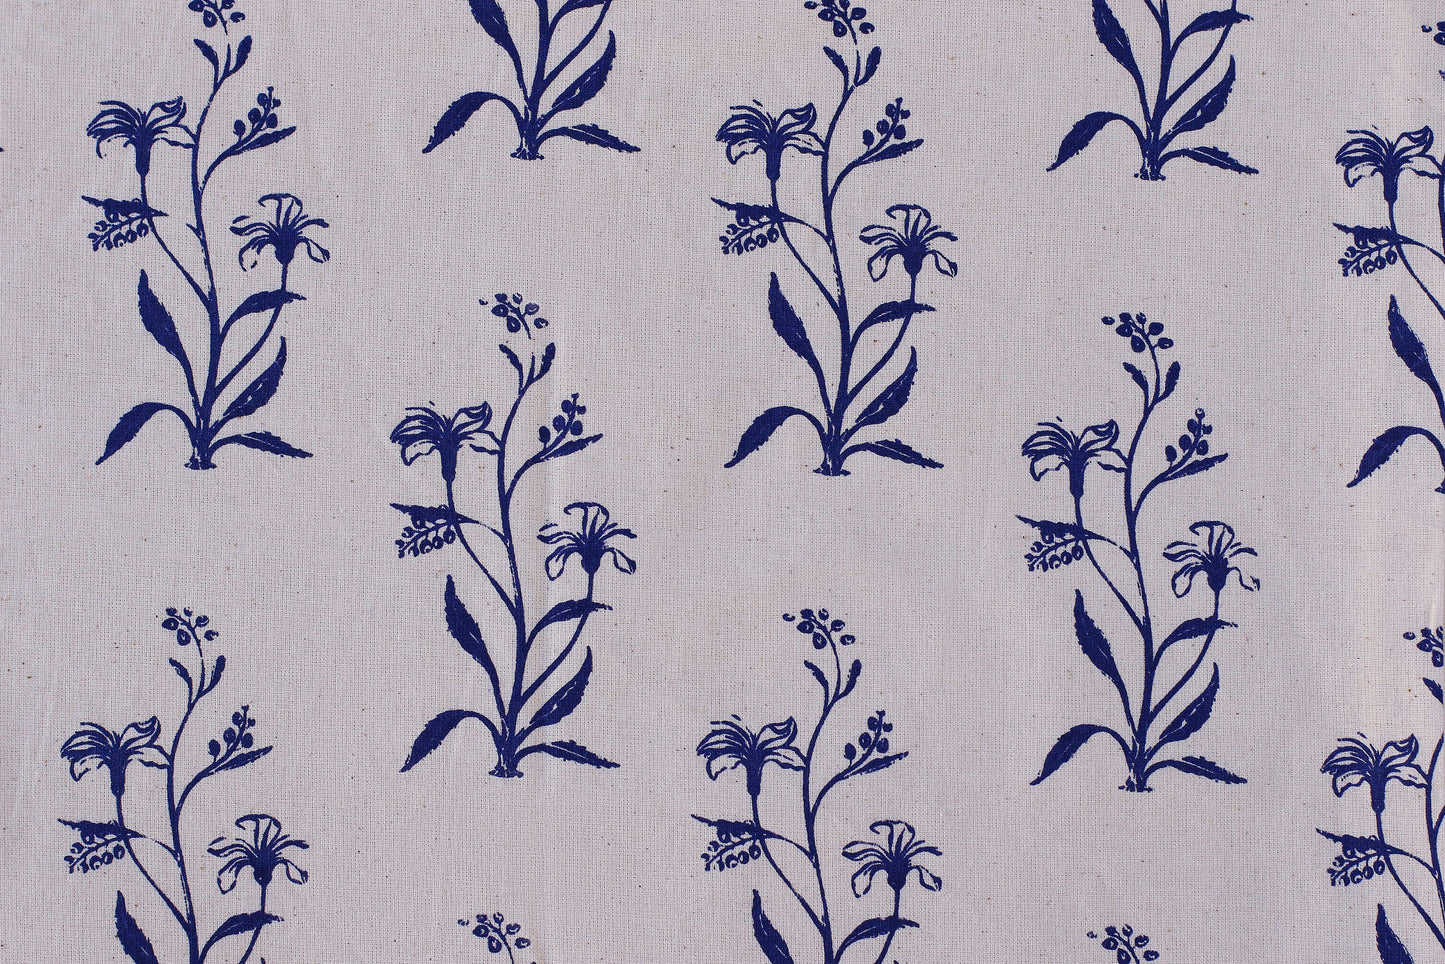 Lily Flower Textile - Navy Blue - Organic White